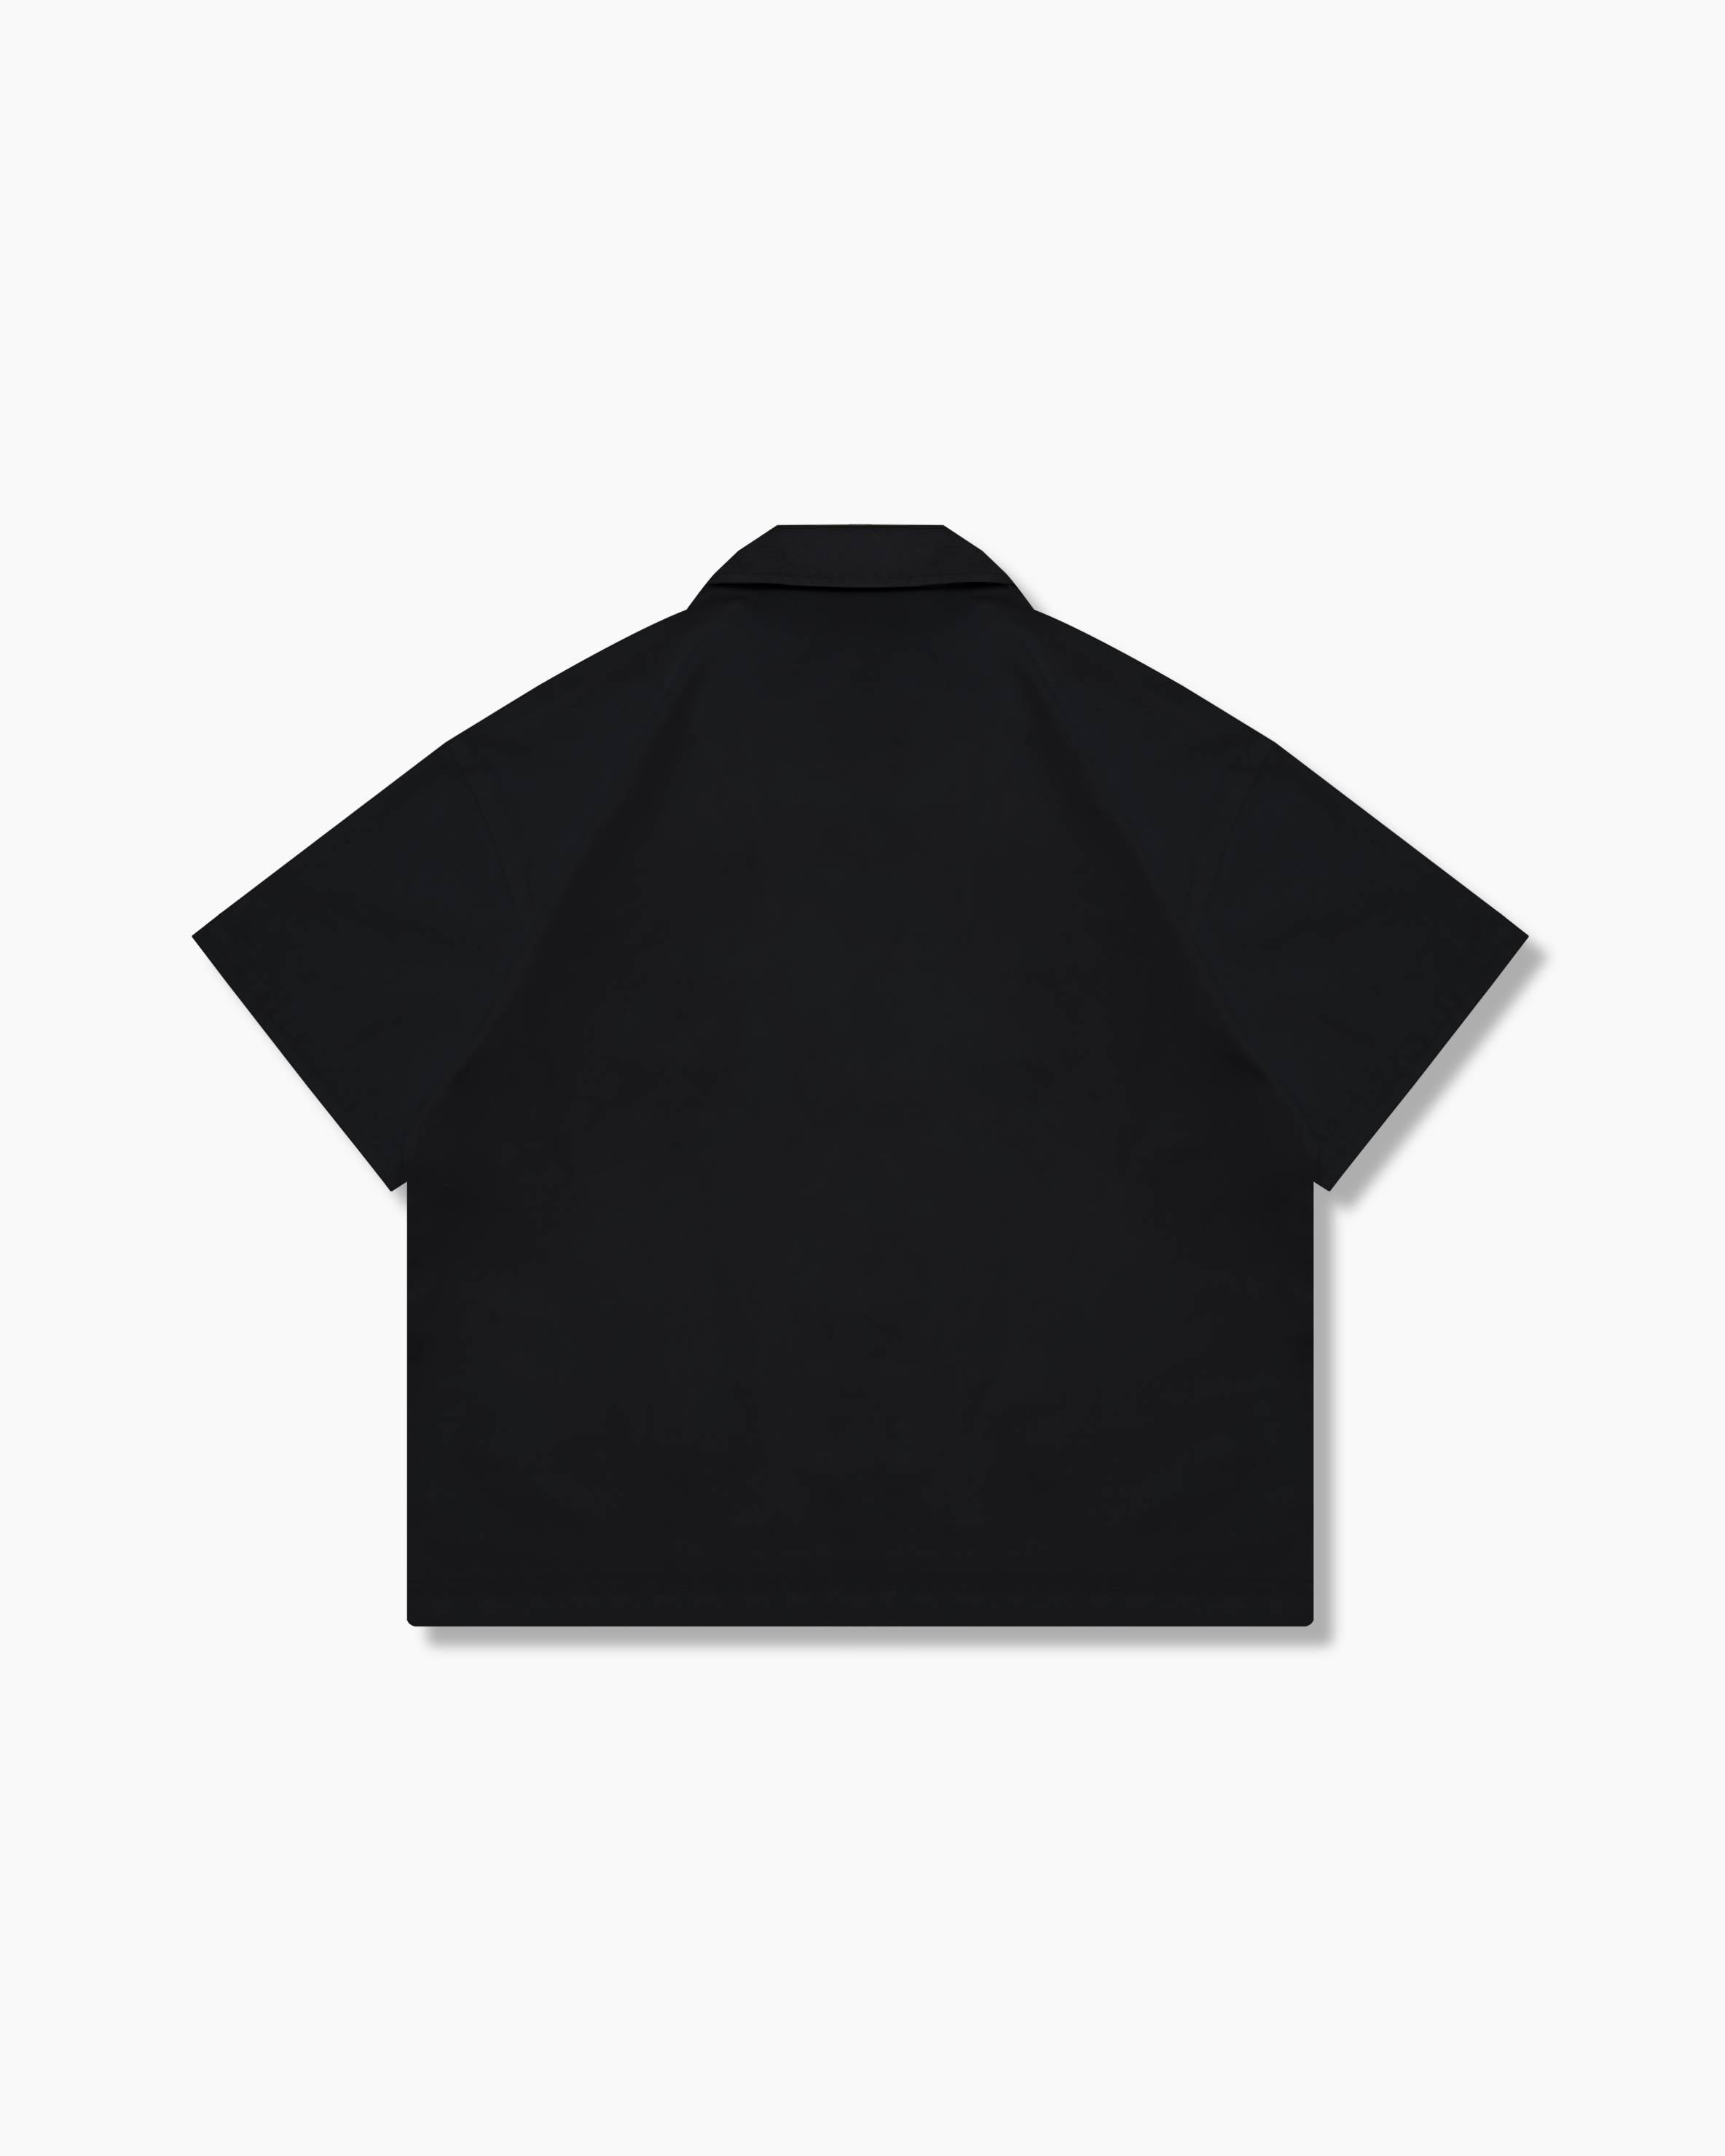 Coat Bowling Shirt - Obsidian